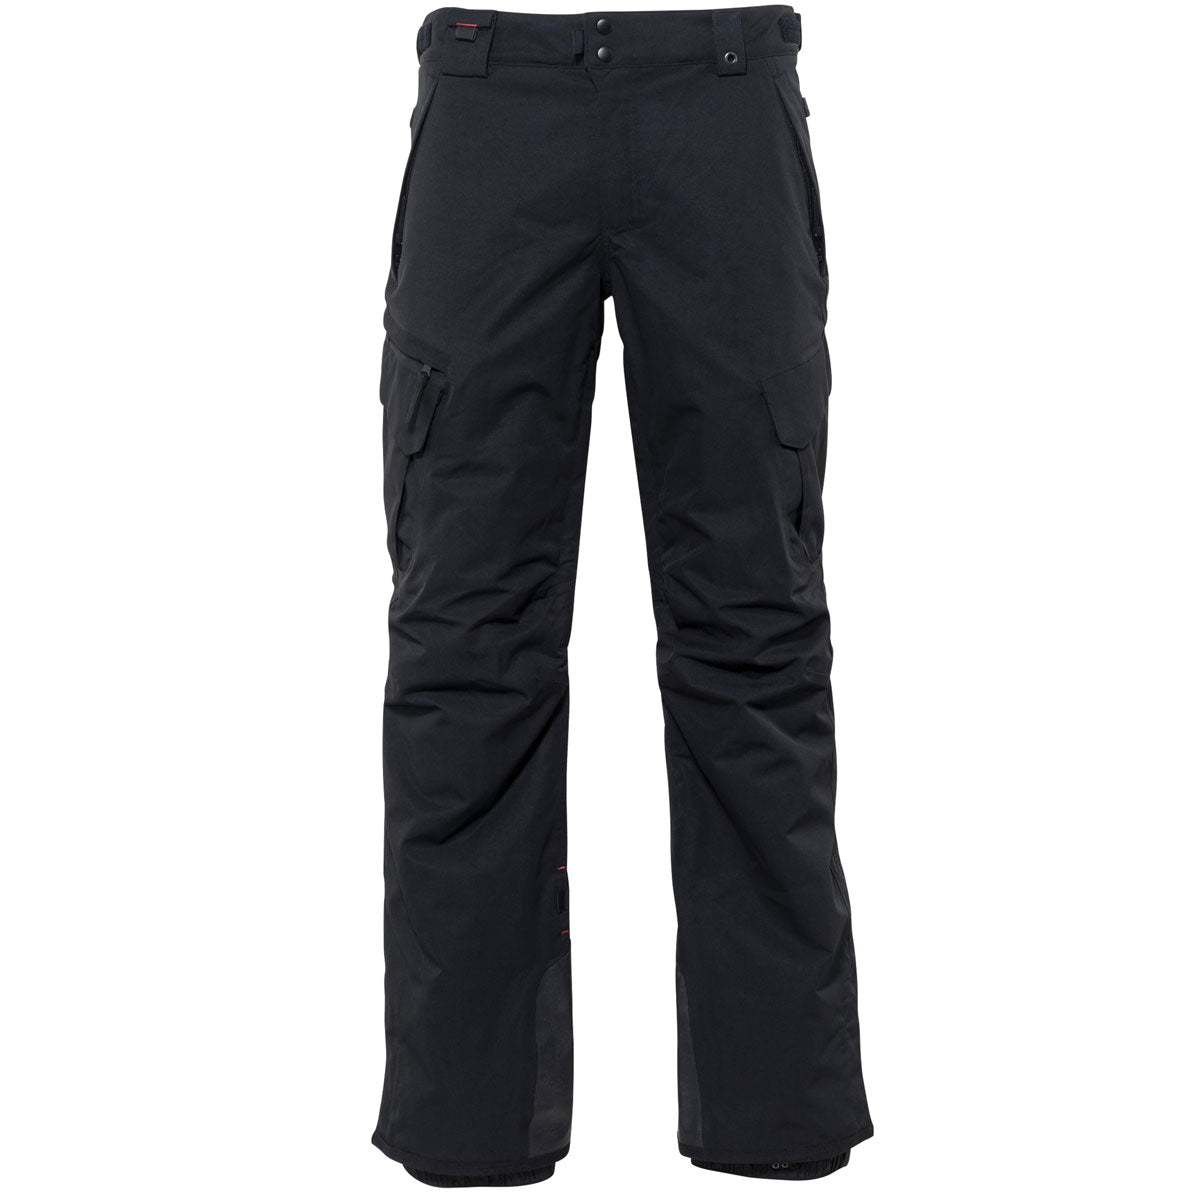 686 Men's SMARTY 3-in-1 Cargo Snowboard Pants - Black image 1